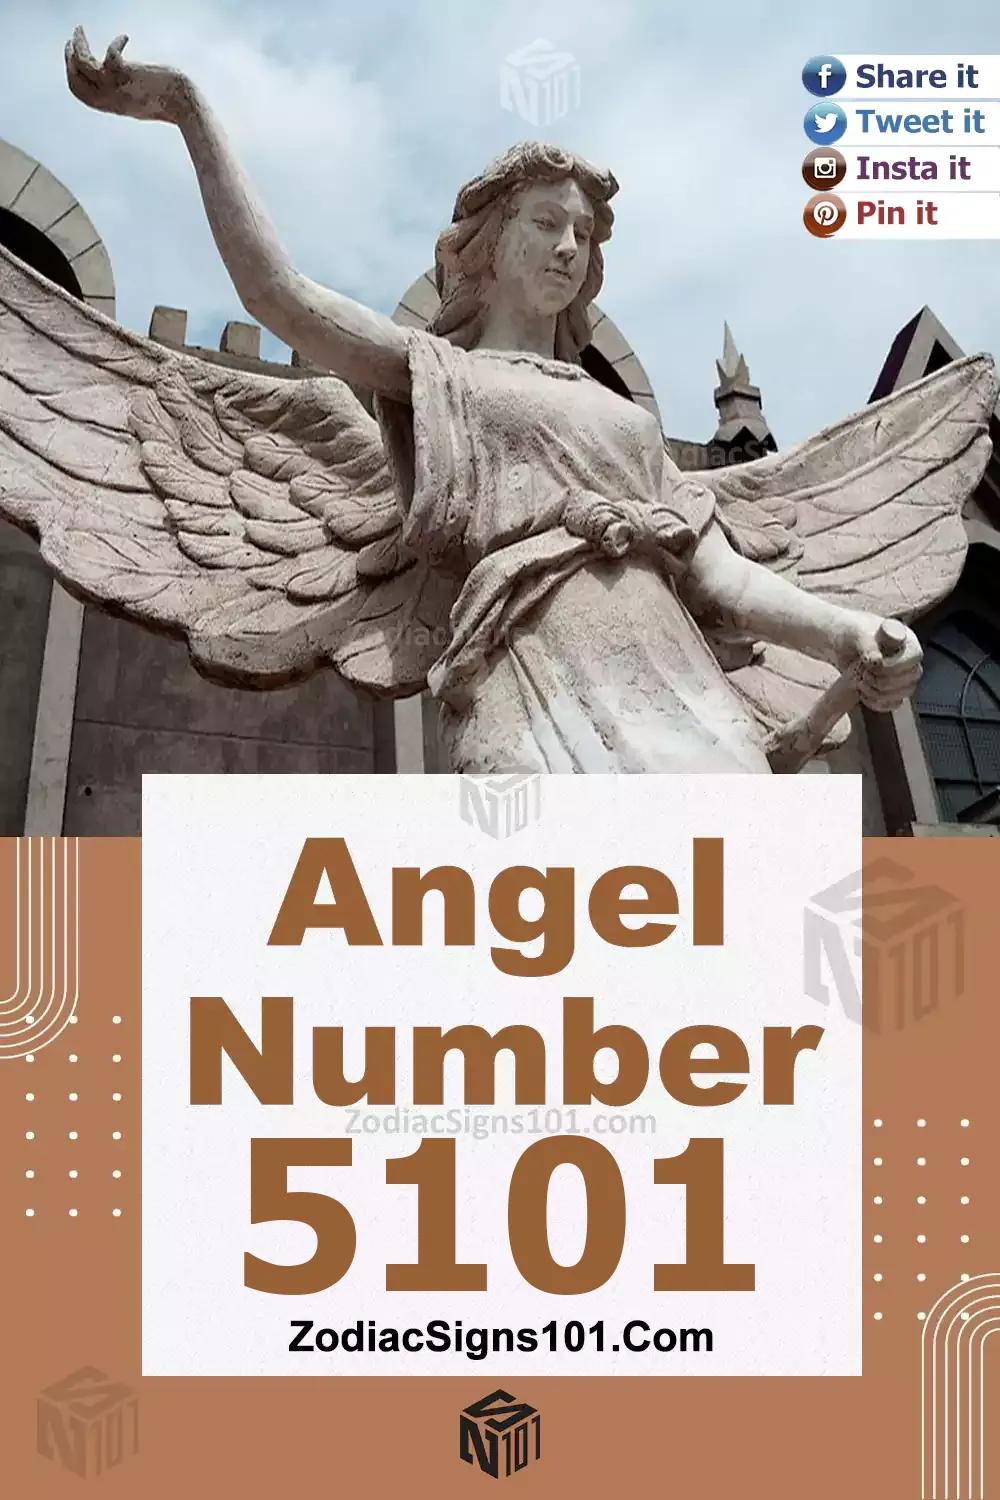 5101-Angel-Number-Meaning.jpg